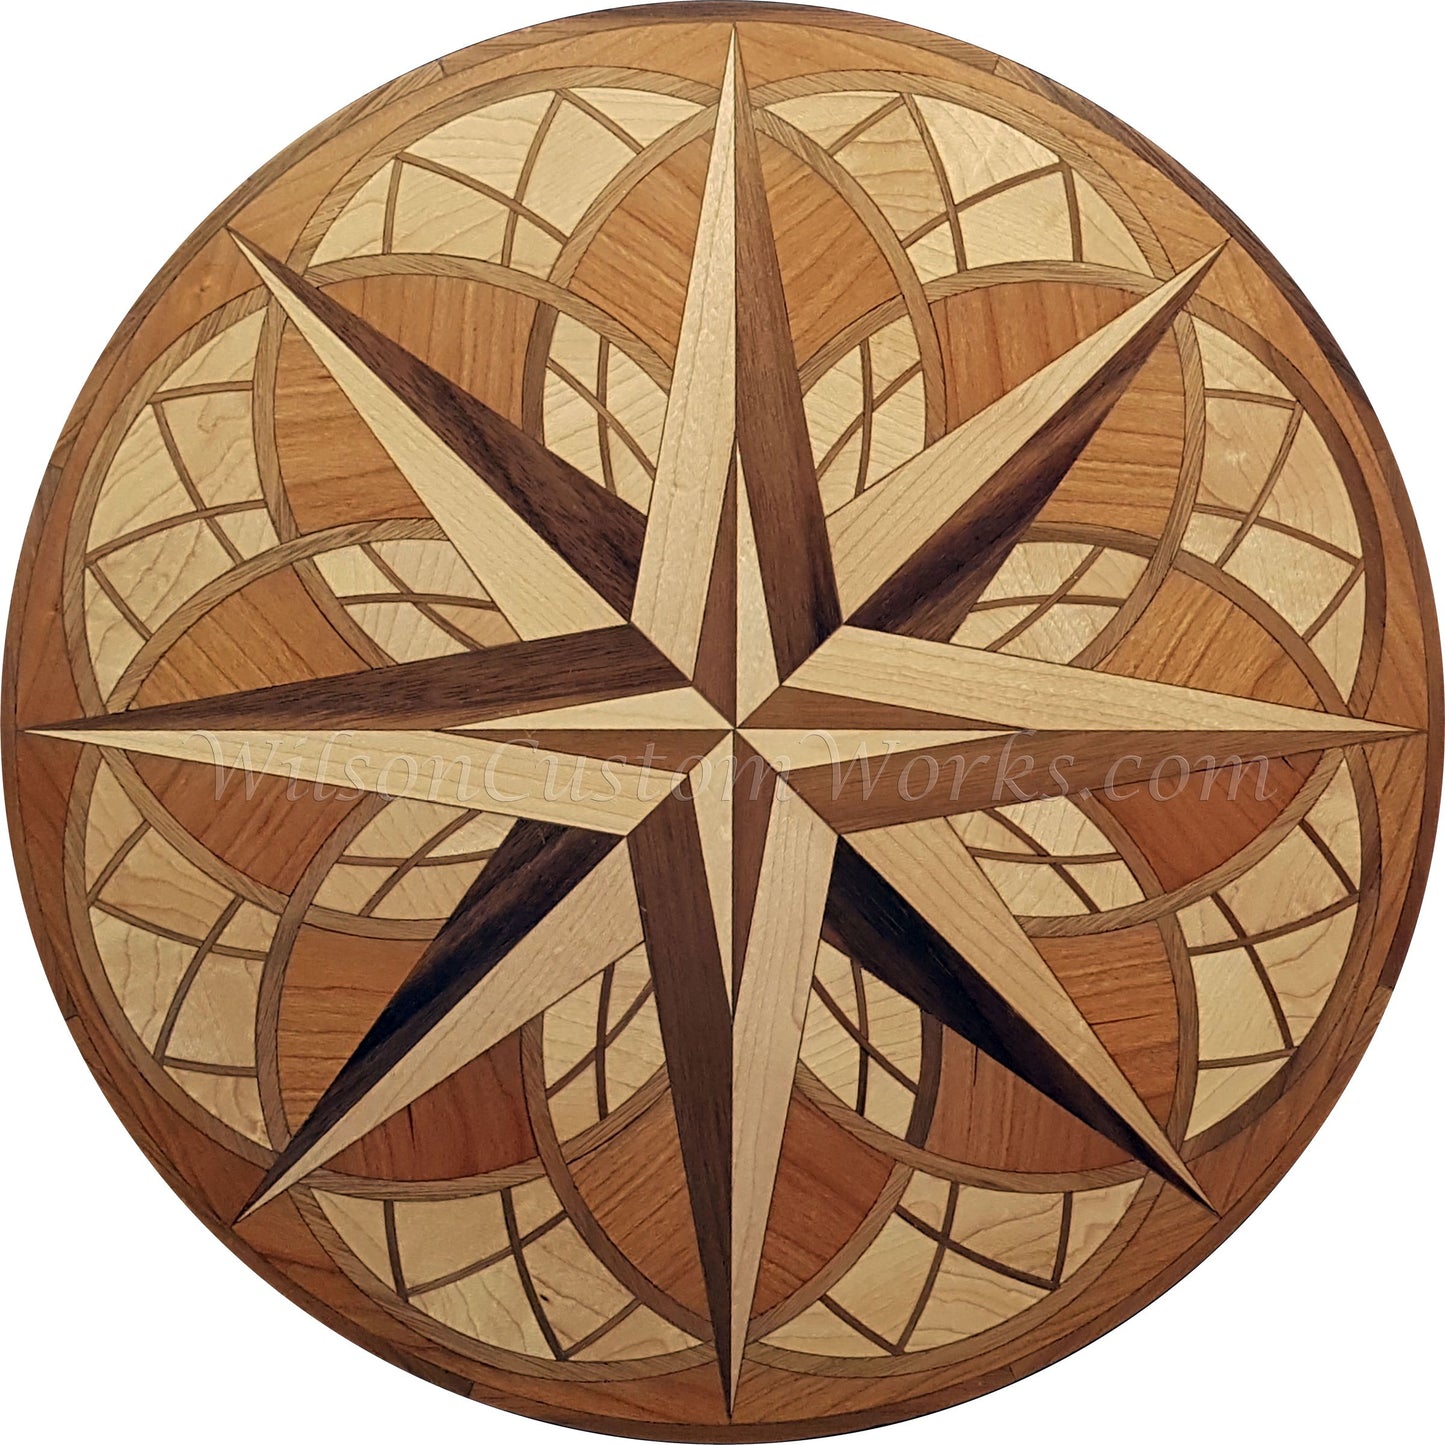 Wilson Custom Works hardwood wood floor inlay medallion nova compass rose design